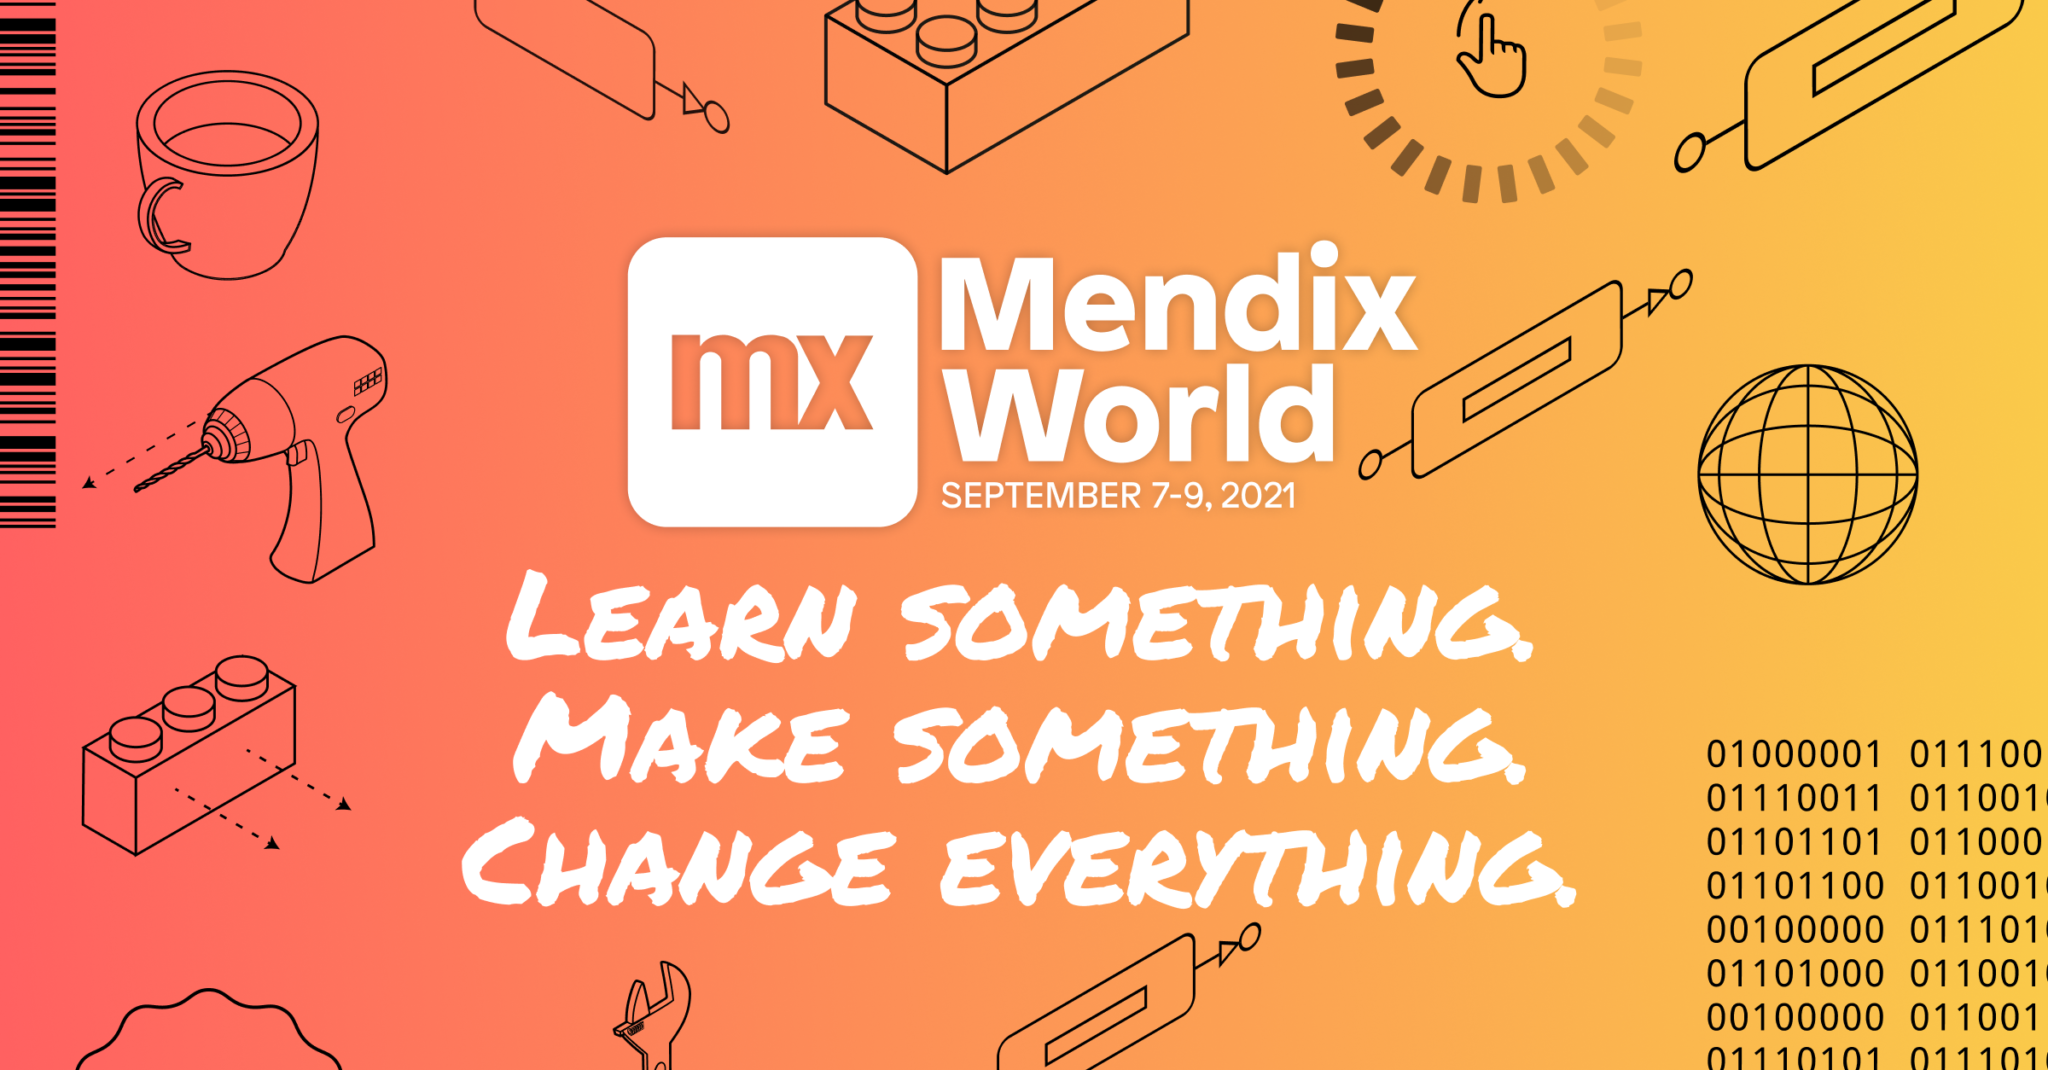 Logo for Mendix World 2021 with the words "Mendix World Learn Something. Make Something. Change Everything.""